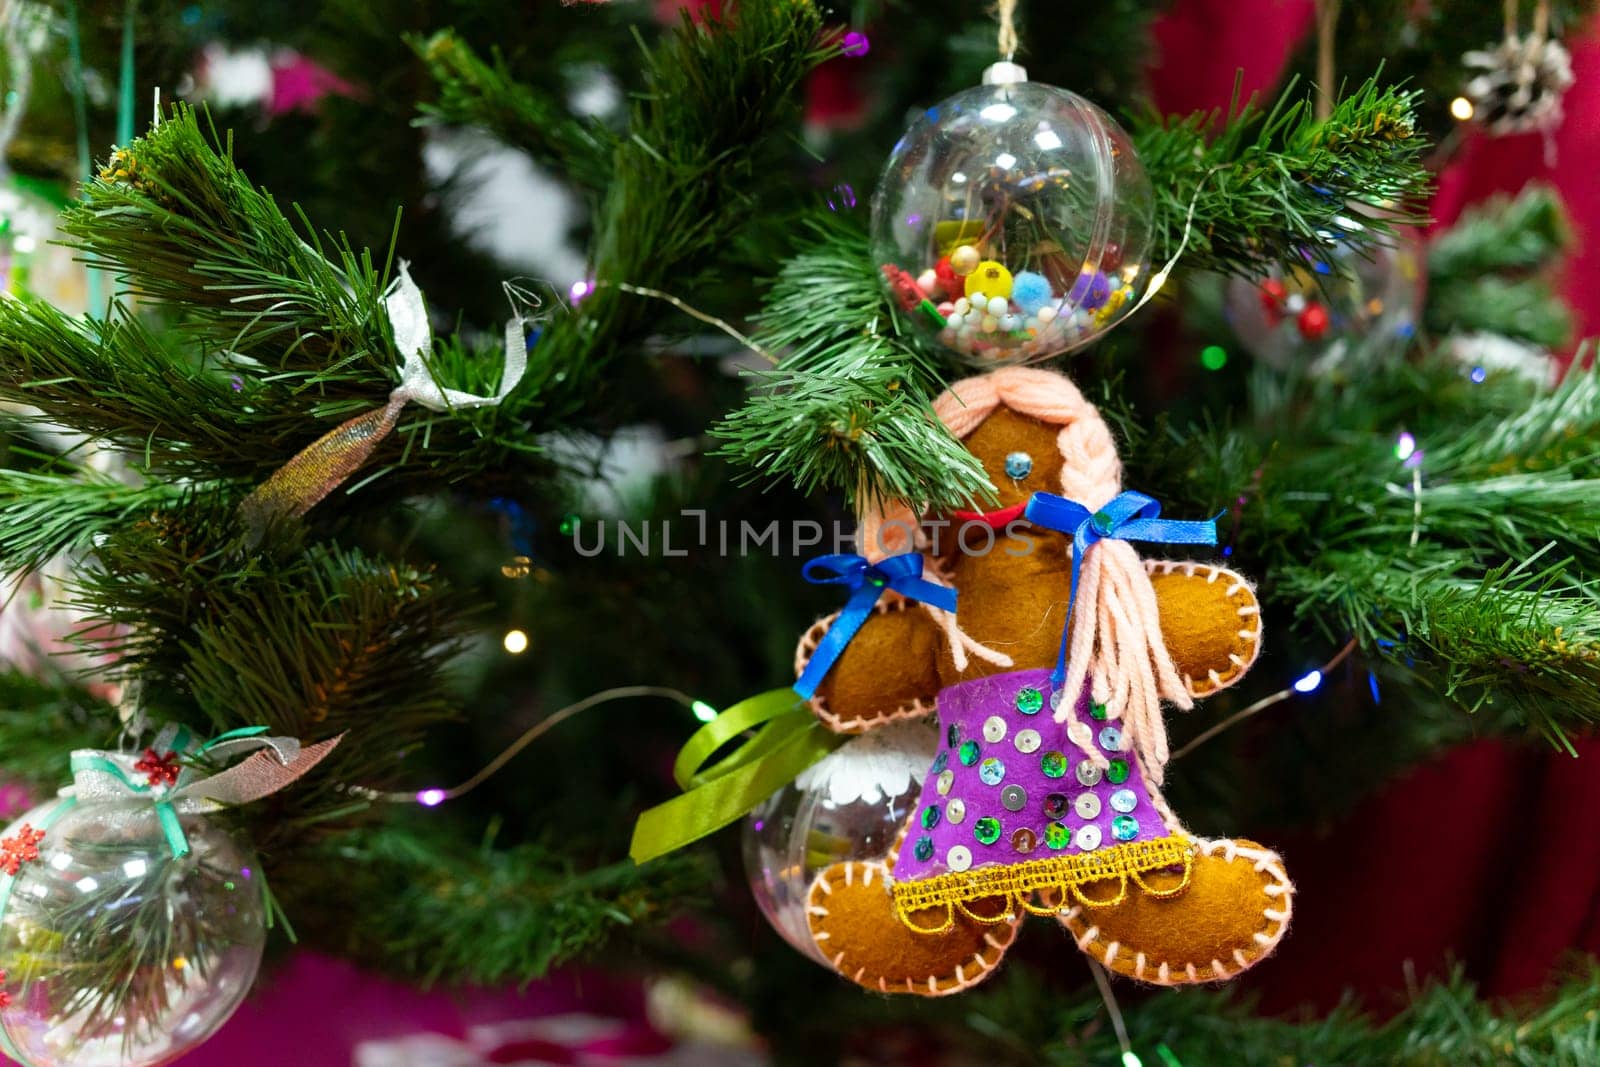 A handmade Christmas tree decoration hangs on the Christmas tree by Serhii_Voroshchuk